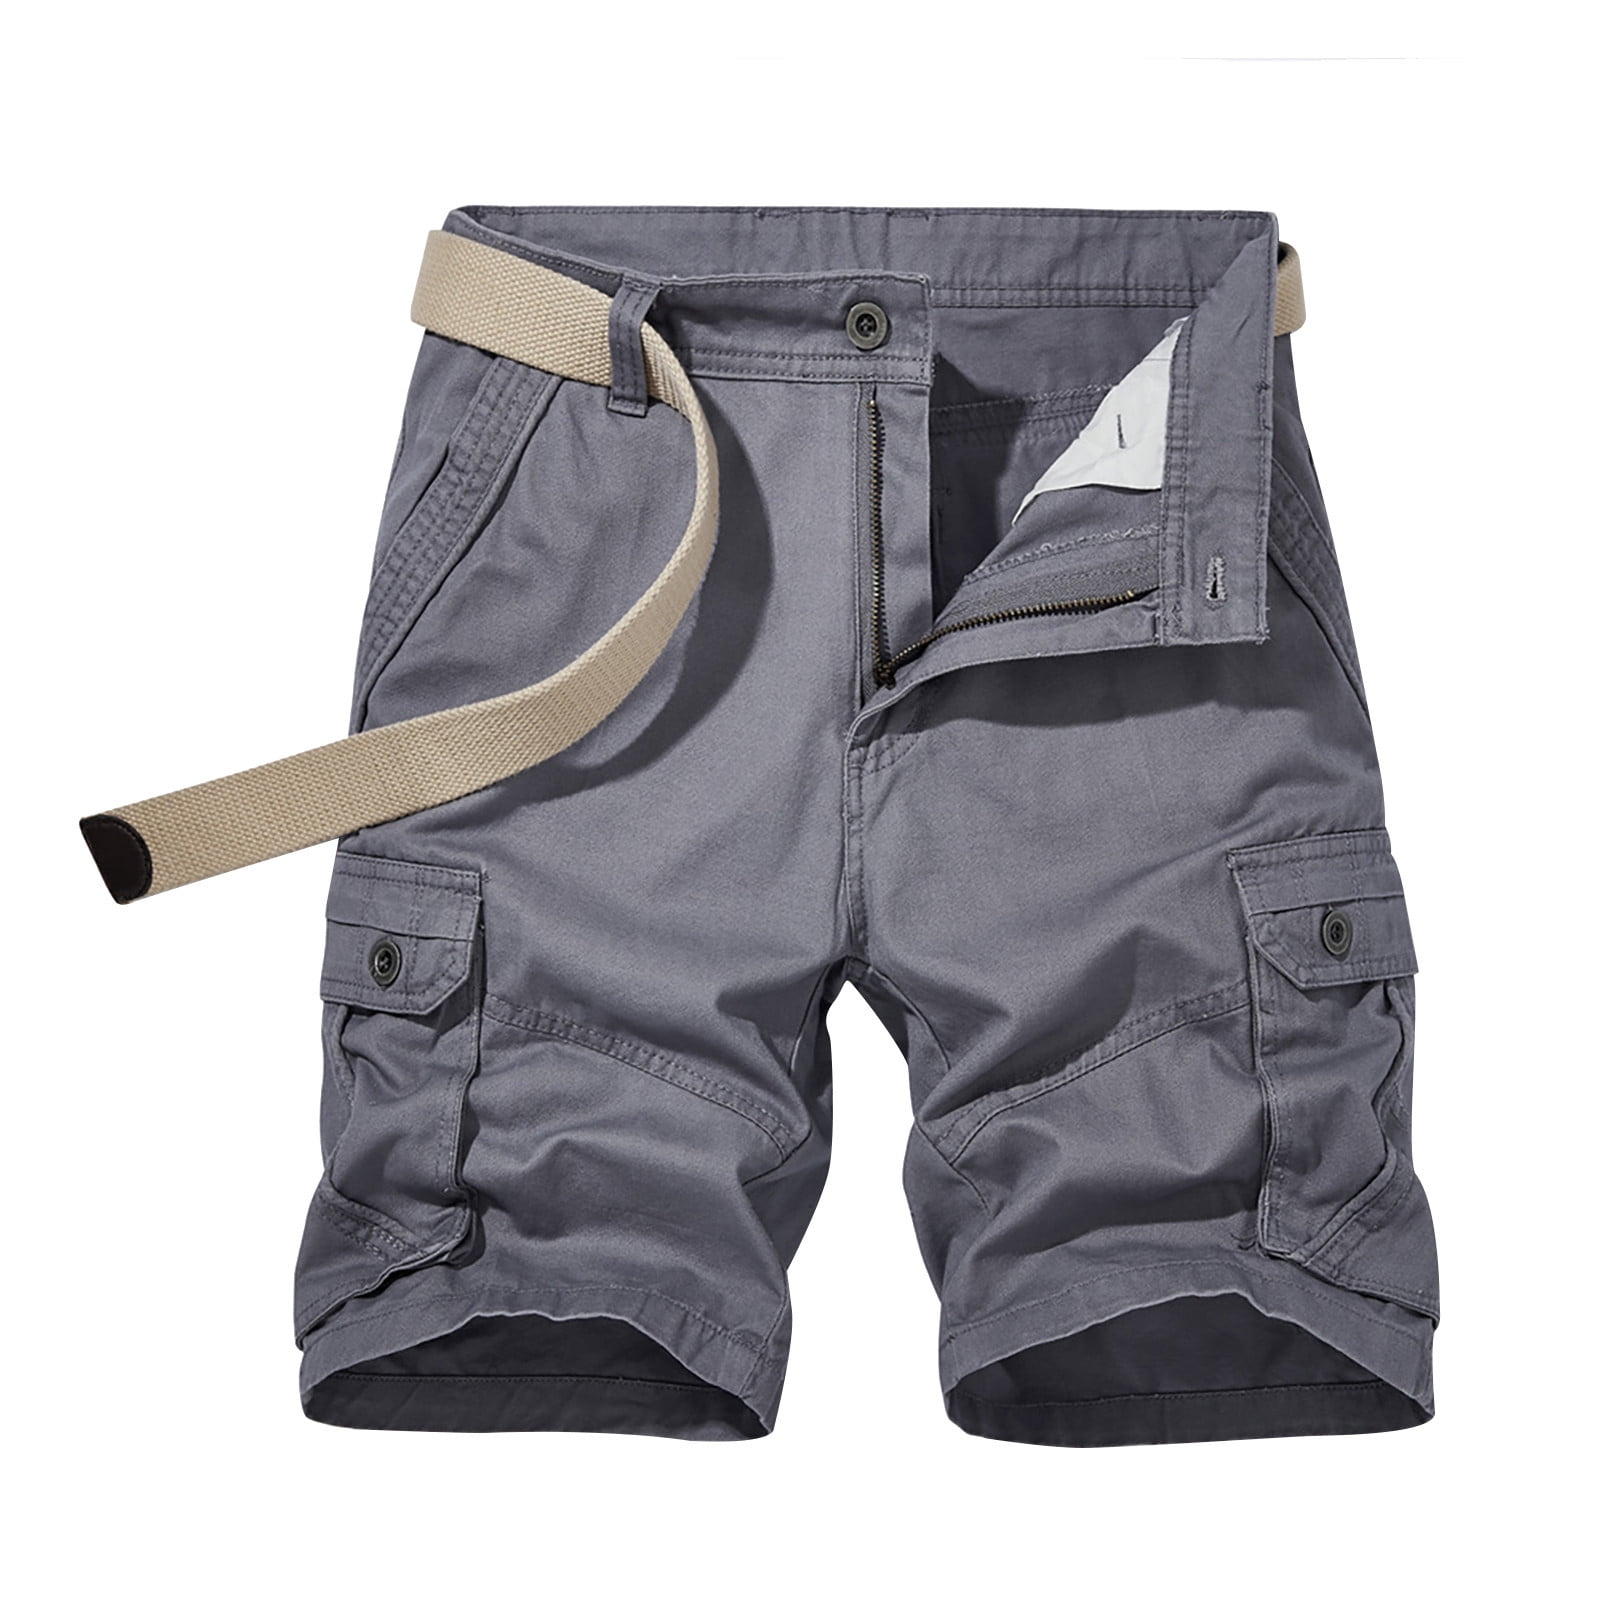 PMUYBHF Men's Cargo Pants Size 36 X 29 Mens Outdoor Casual Elastic